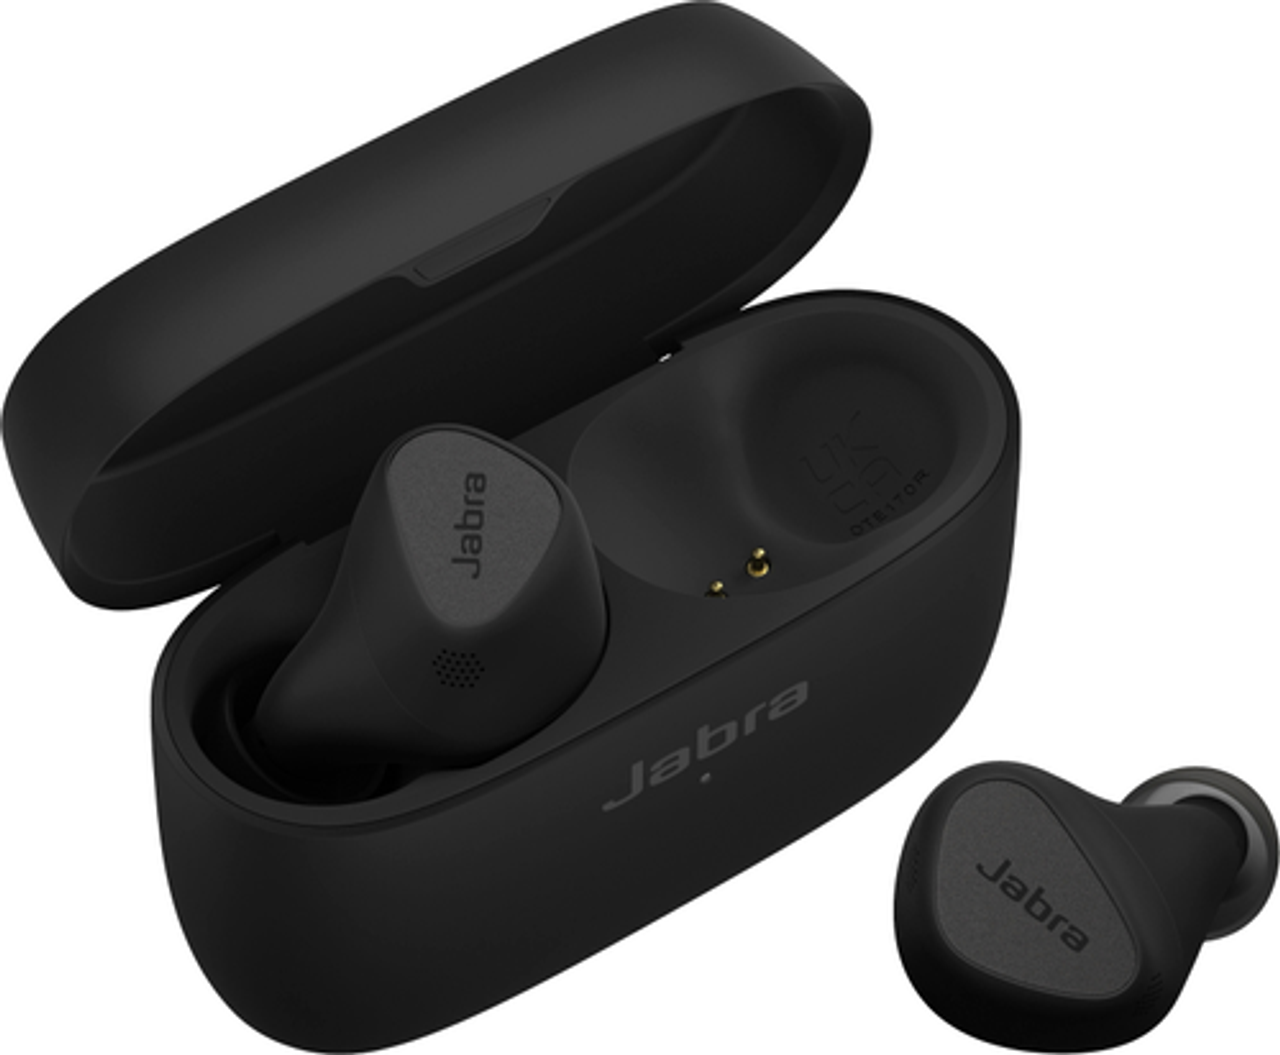 Jabra - Elite 5 True Wireless Hybrid Active Noise Cancelling In-ear Headphones - Titanium Black